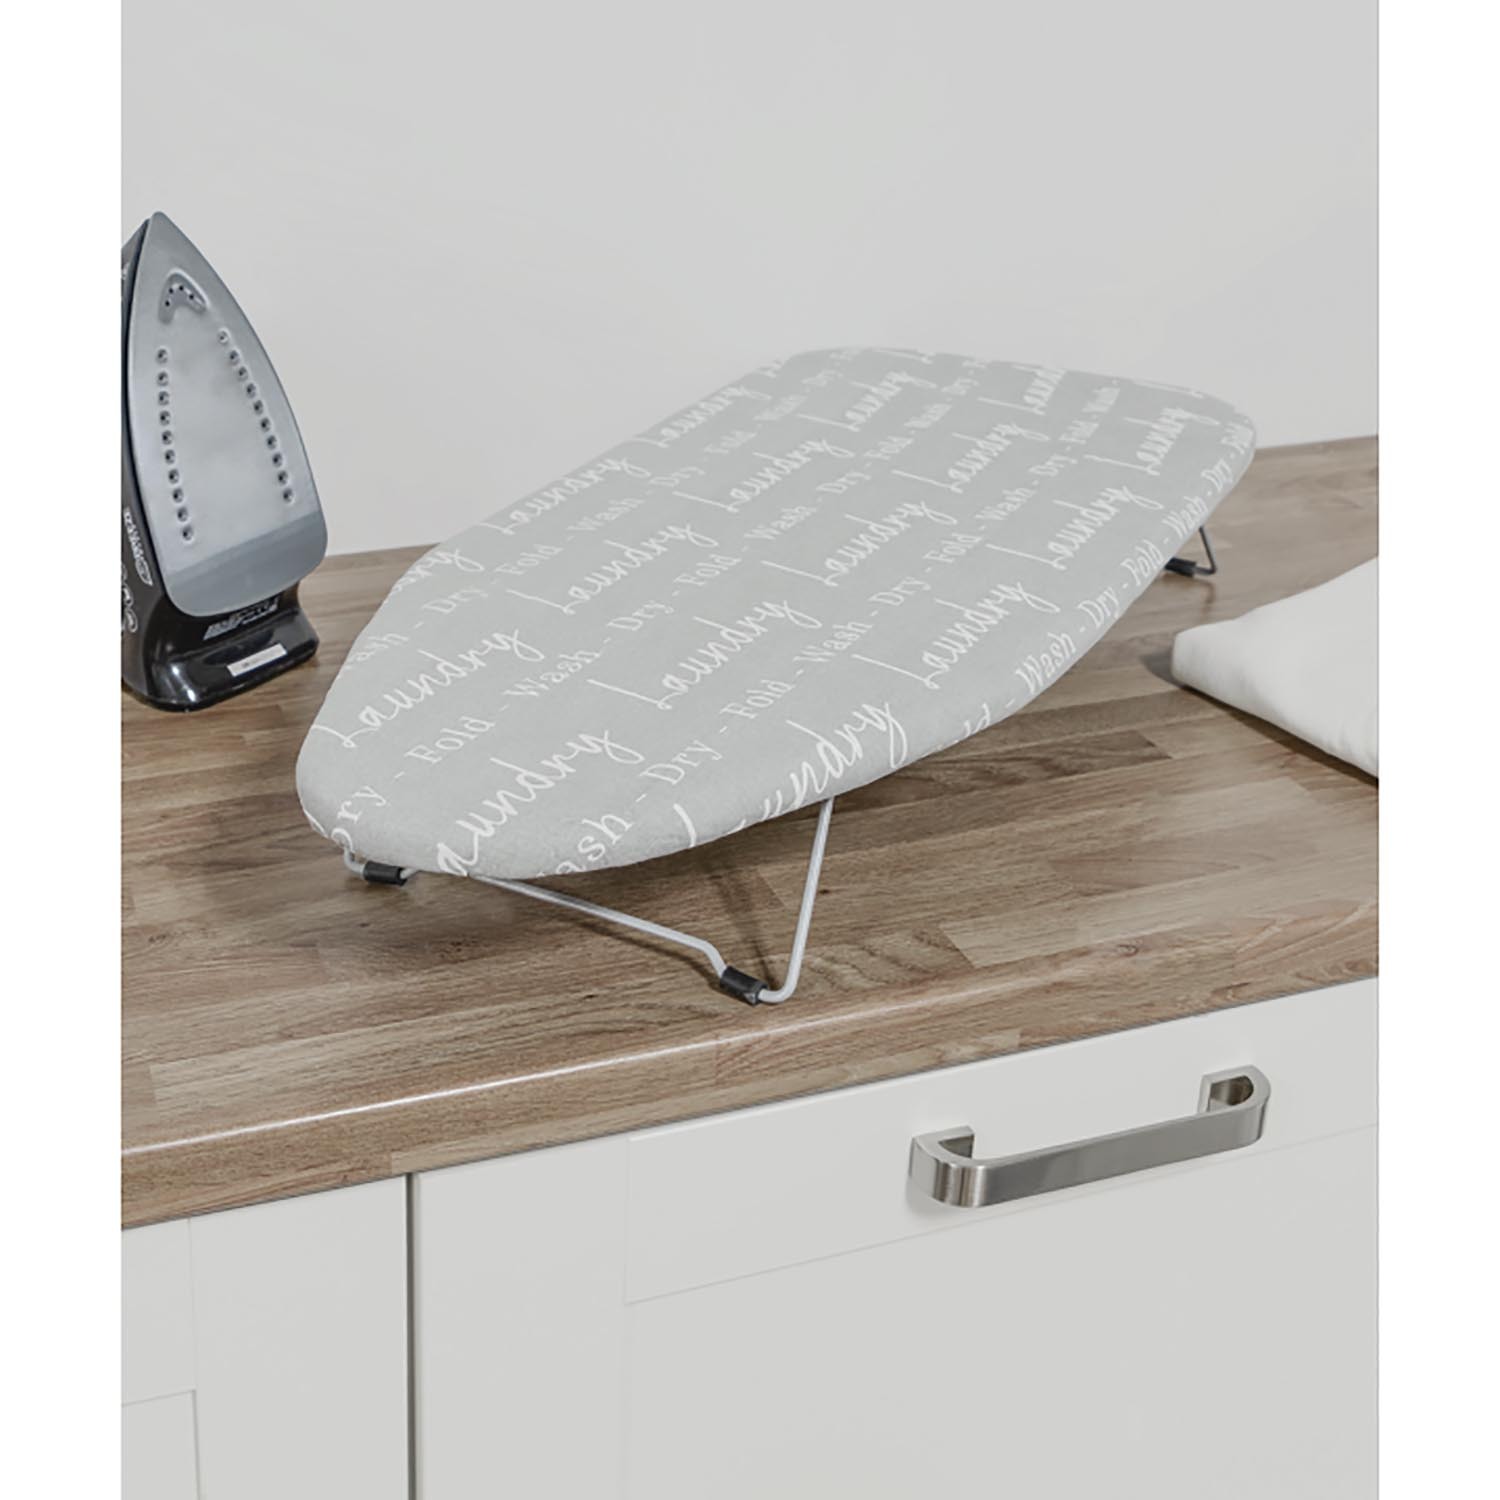 Tabletop Ironing Board - Grey Image 2